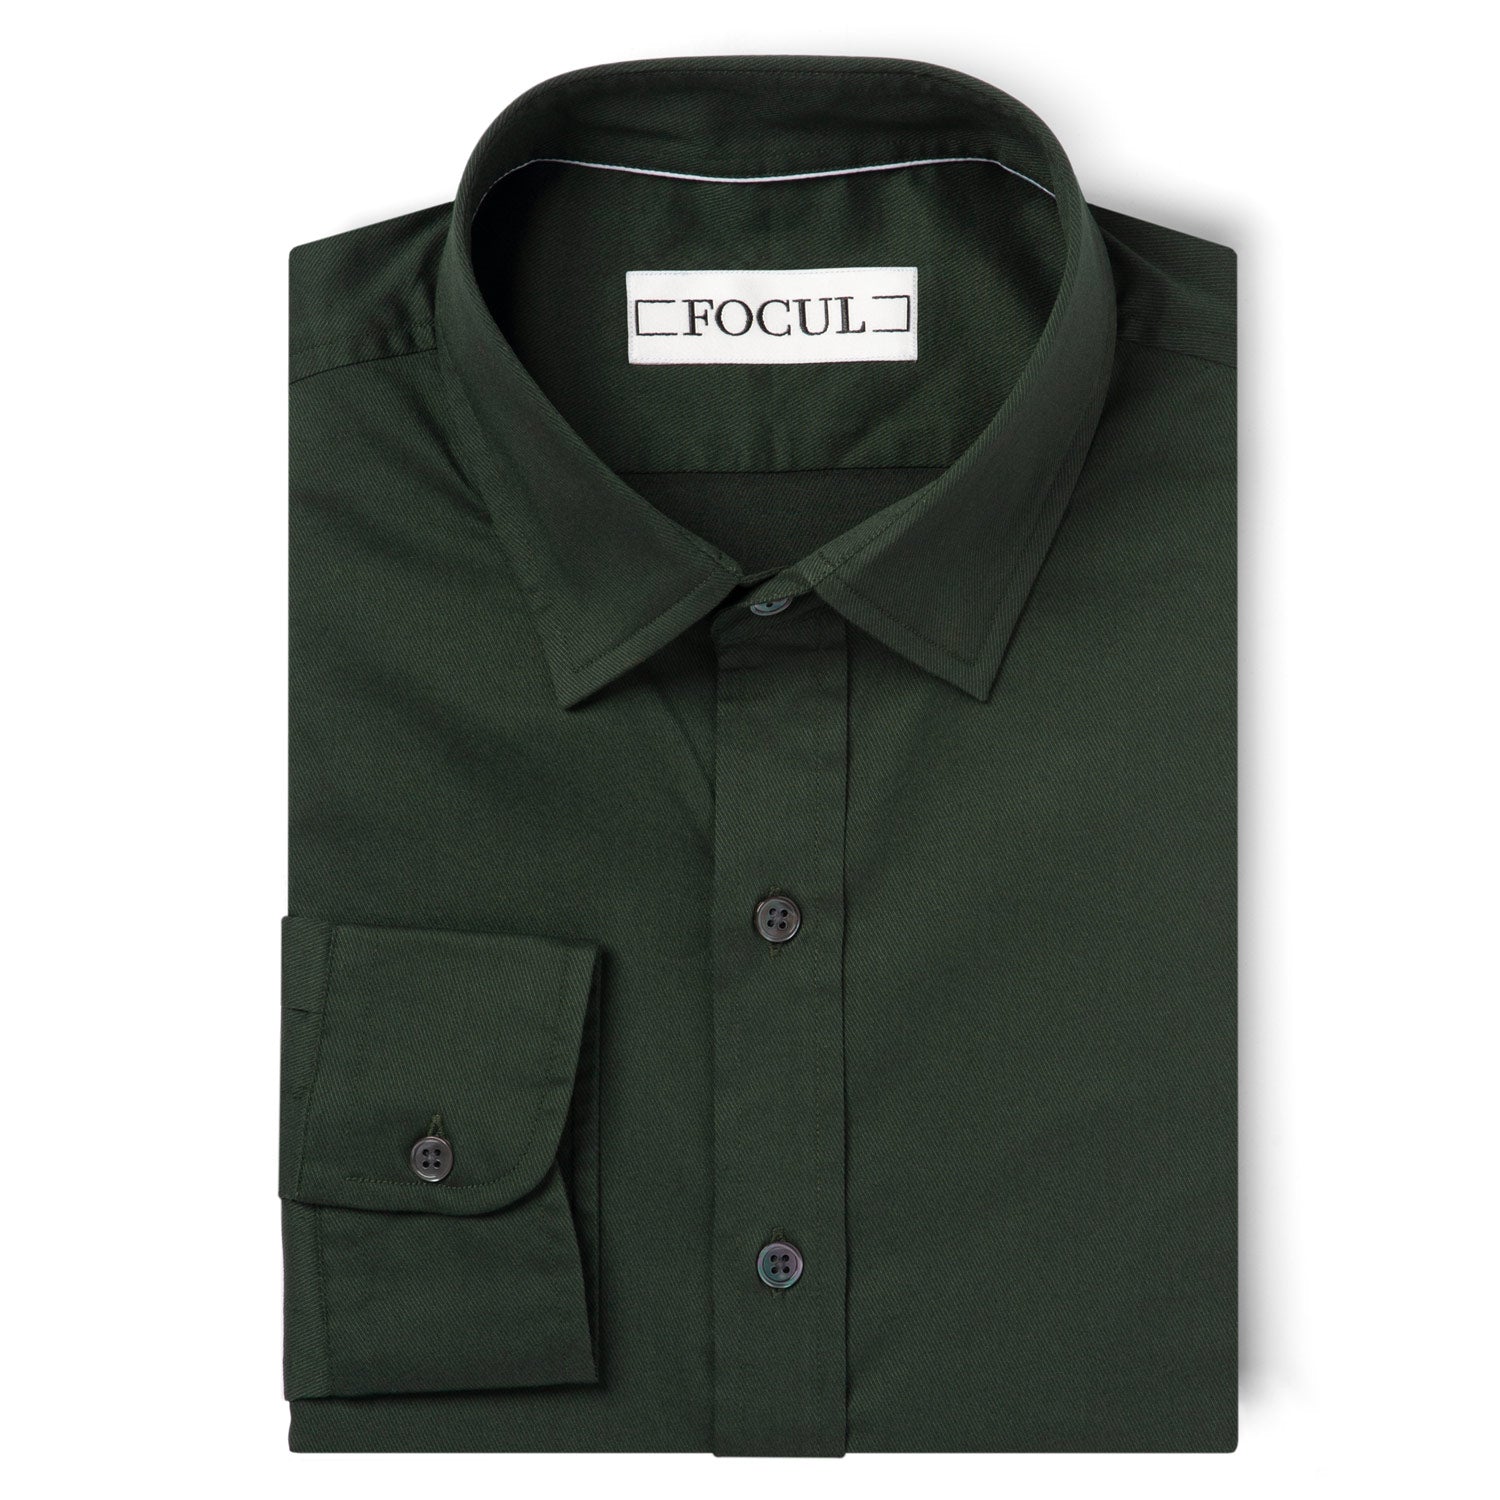 Focul - Evergreen Zero Shirt With White Line Detail